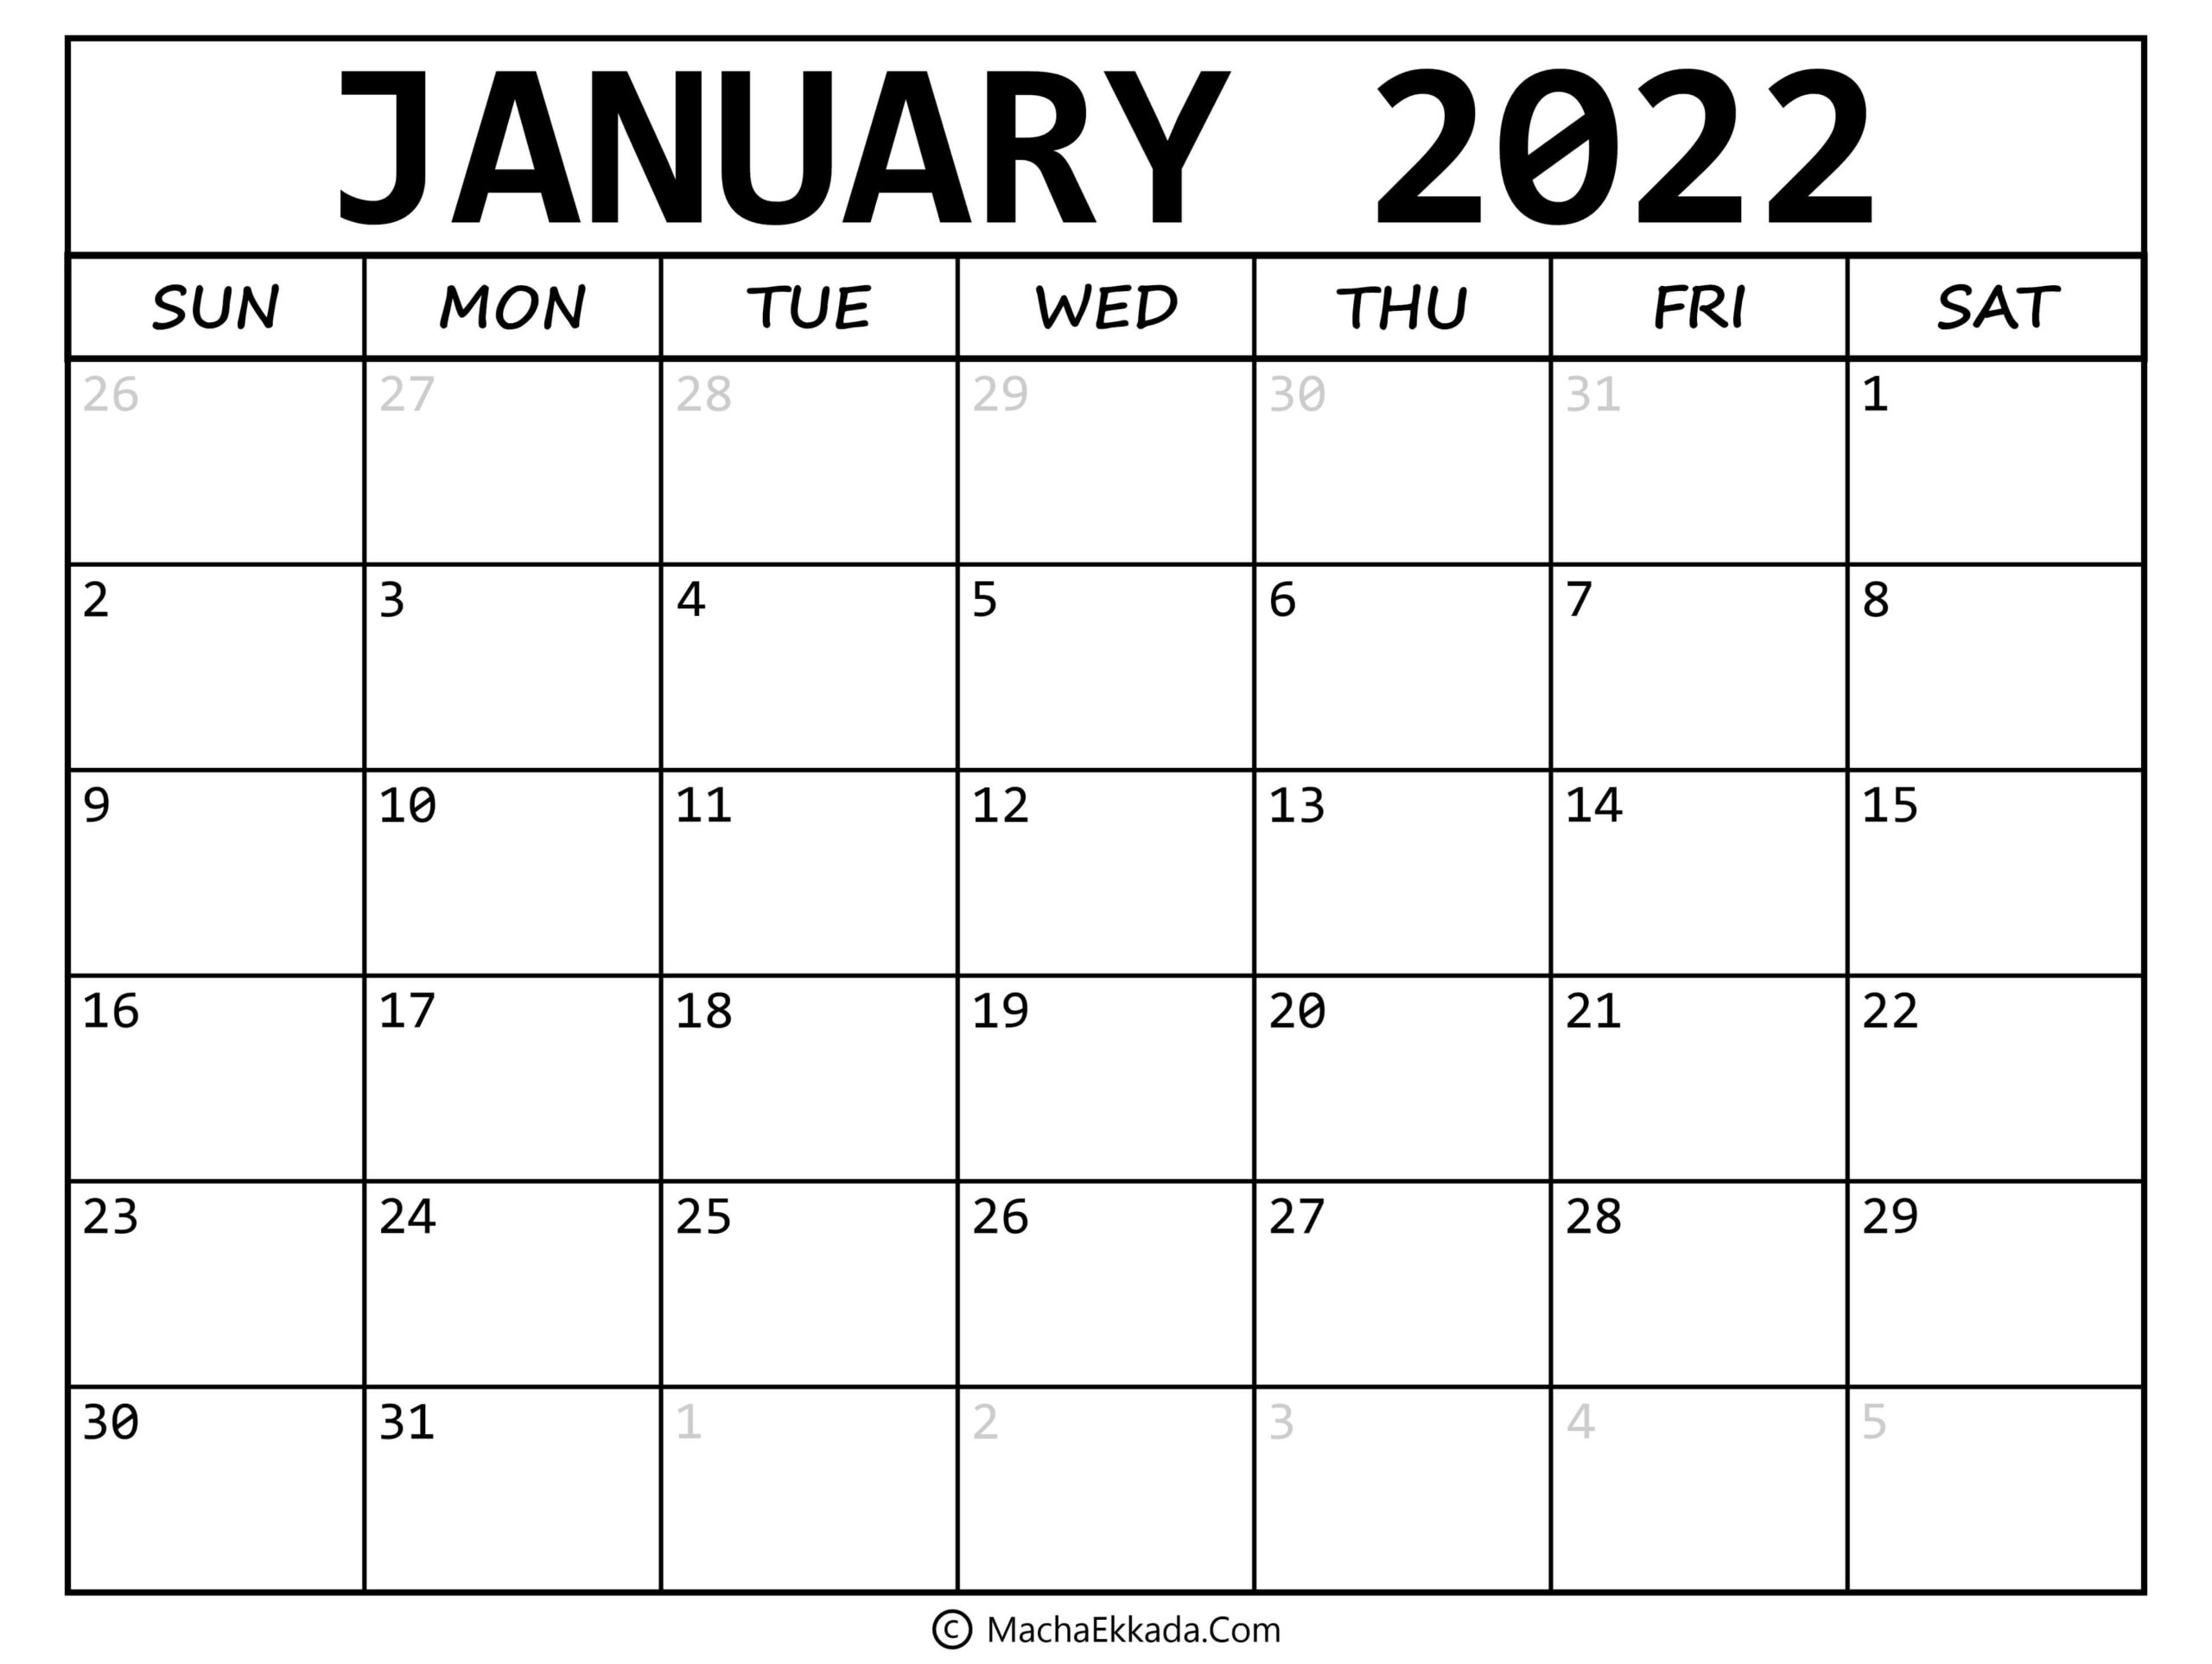 Catch 2022 January Calendar Images